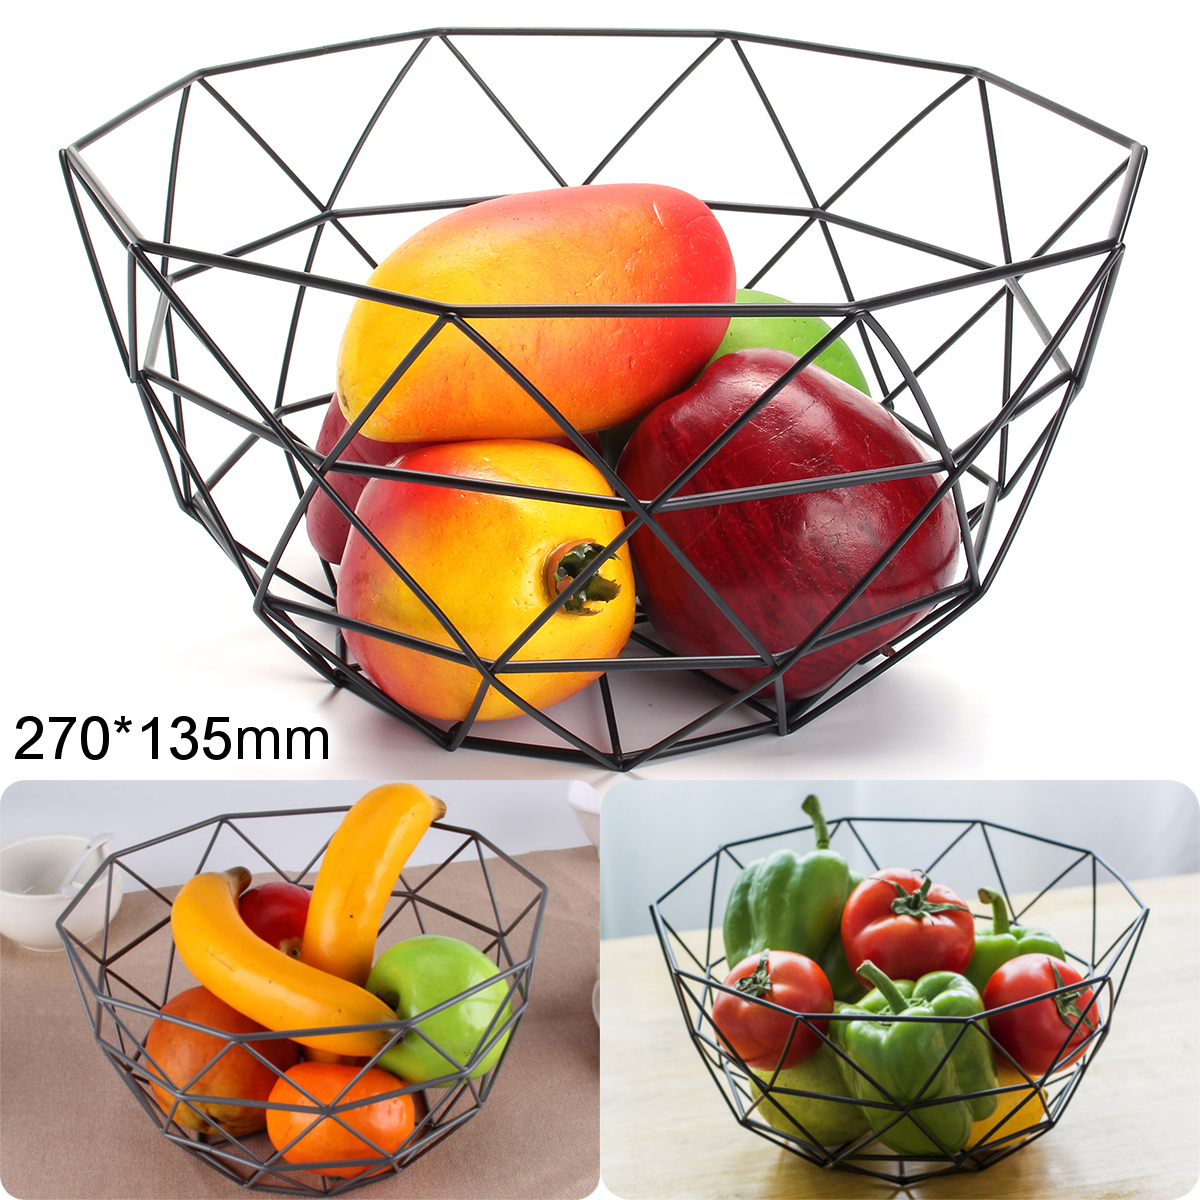 Geometric-Metal-Wire-Decoration-Storage-Display-Basket-Display-Vegetable-Fruit-Bowl-Holder-1251960-6